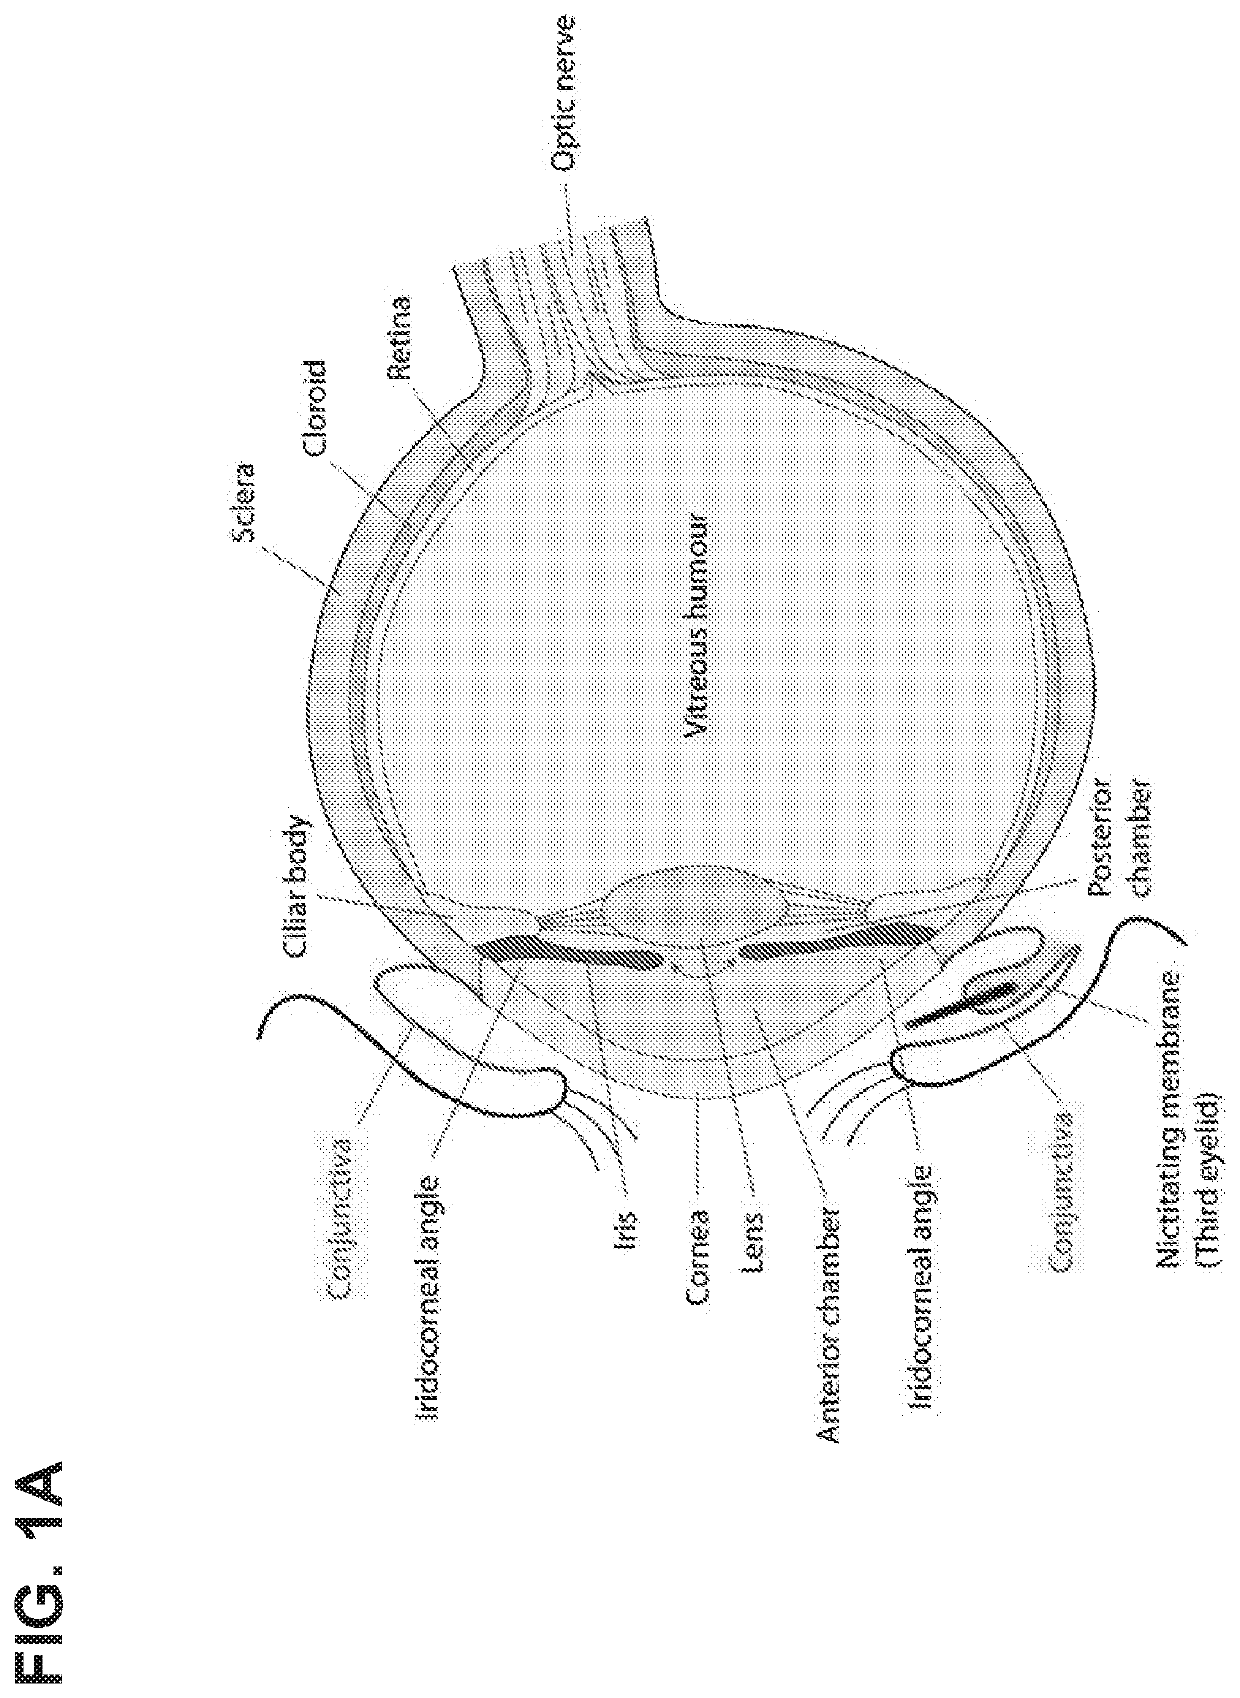 Glaucoma Treatment Via Intracameral Ocular Implants